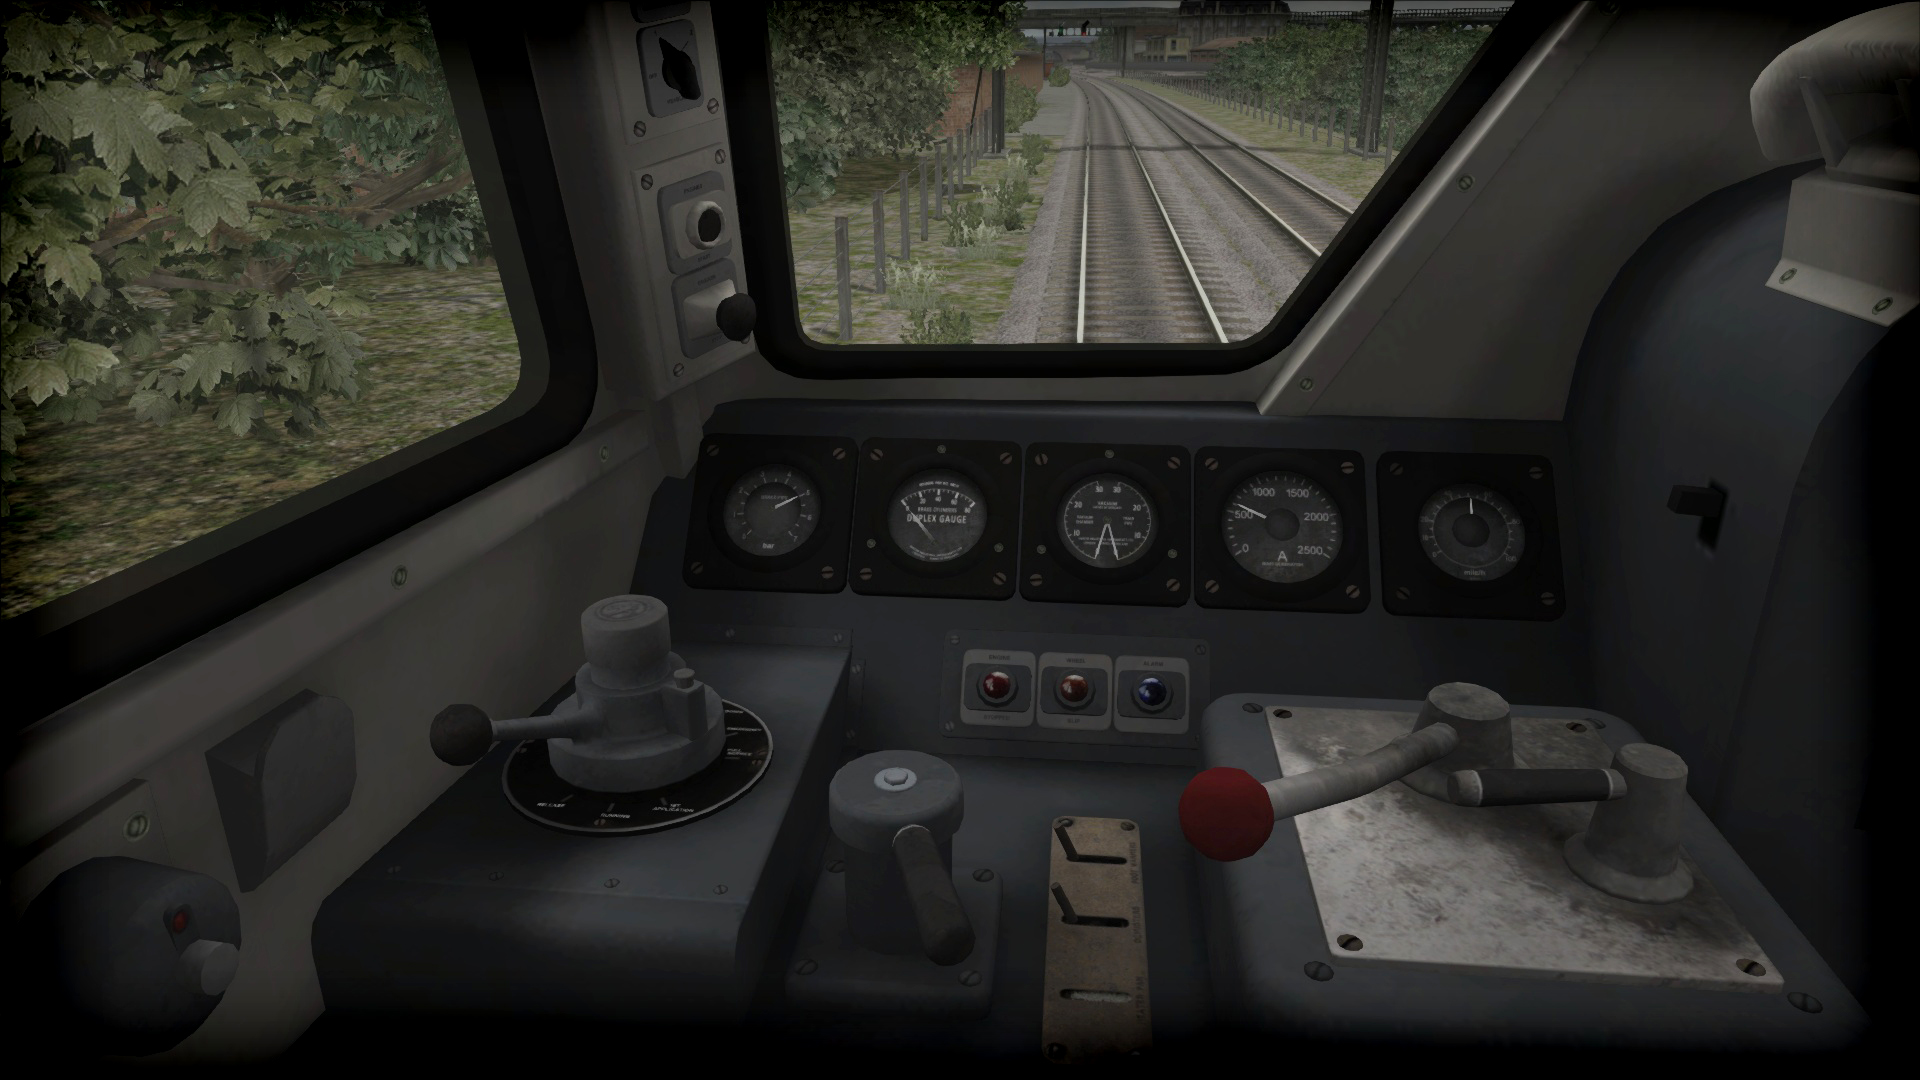 Train Simulator: BR Class 31 Freight Loco Add-On screenshot